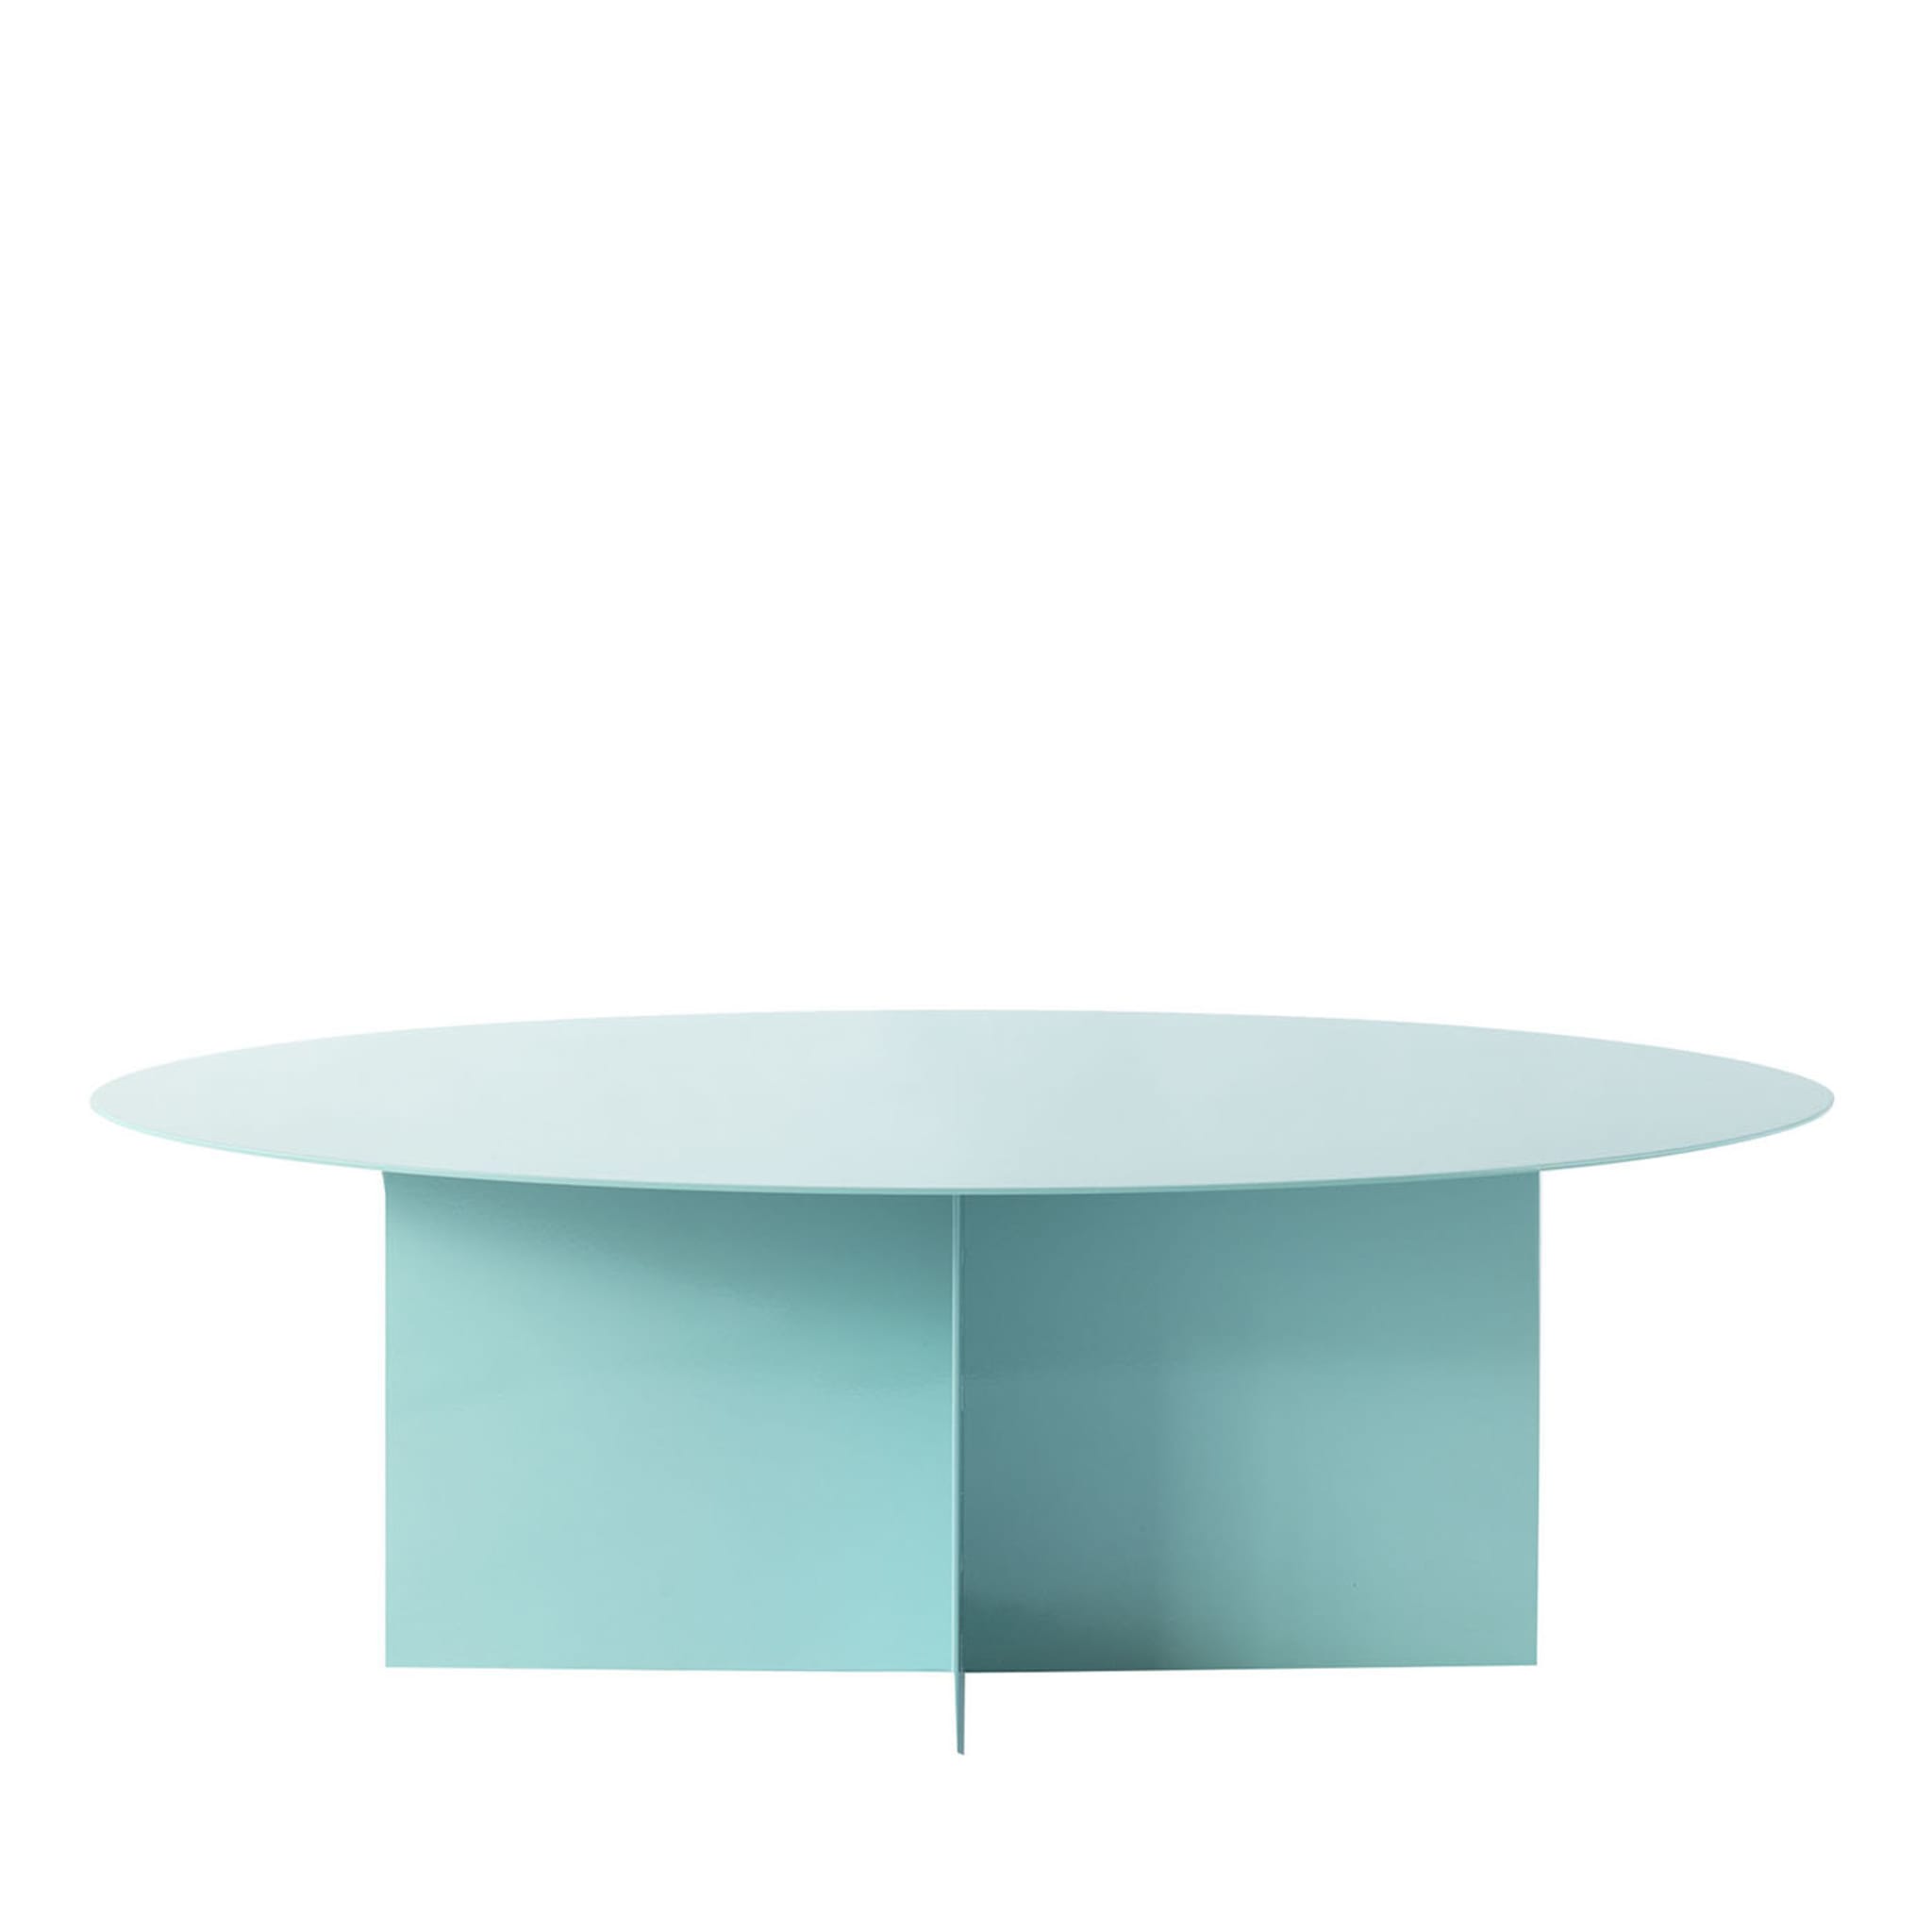 Tavolino ovale Across Elliptical di Claudia Pignatale - Vista principale